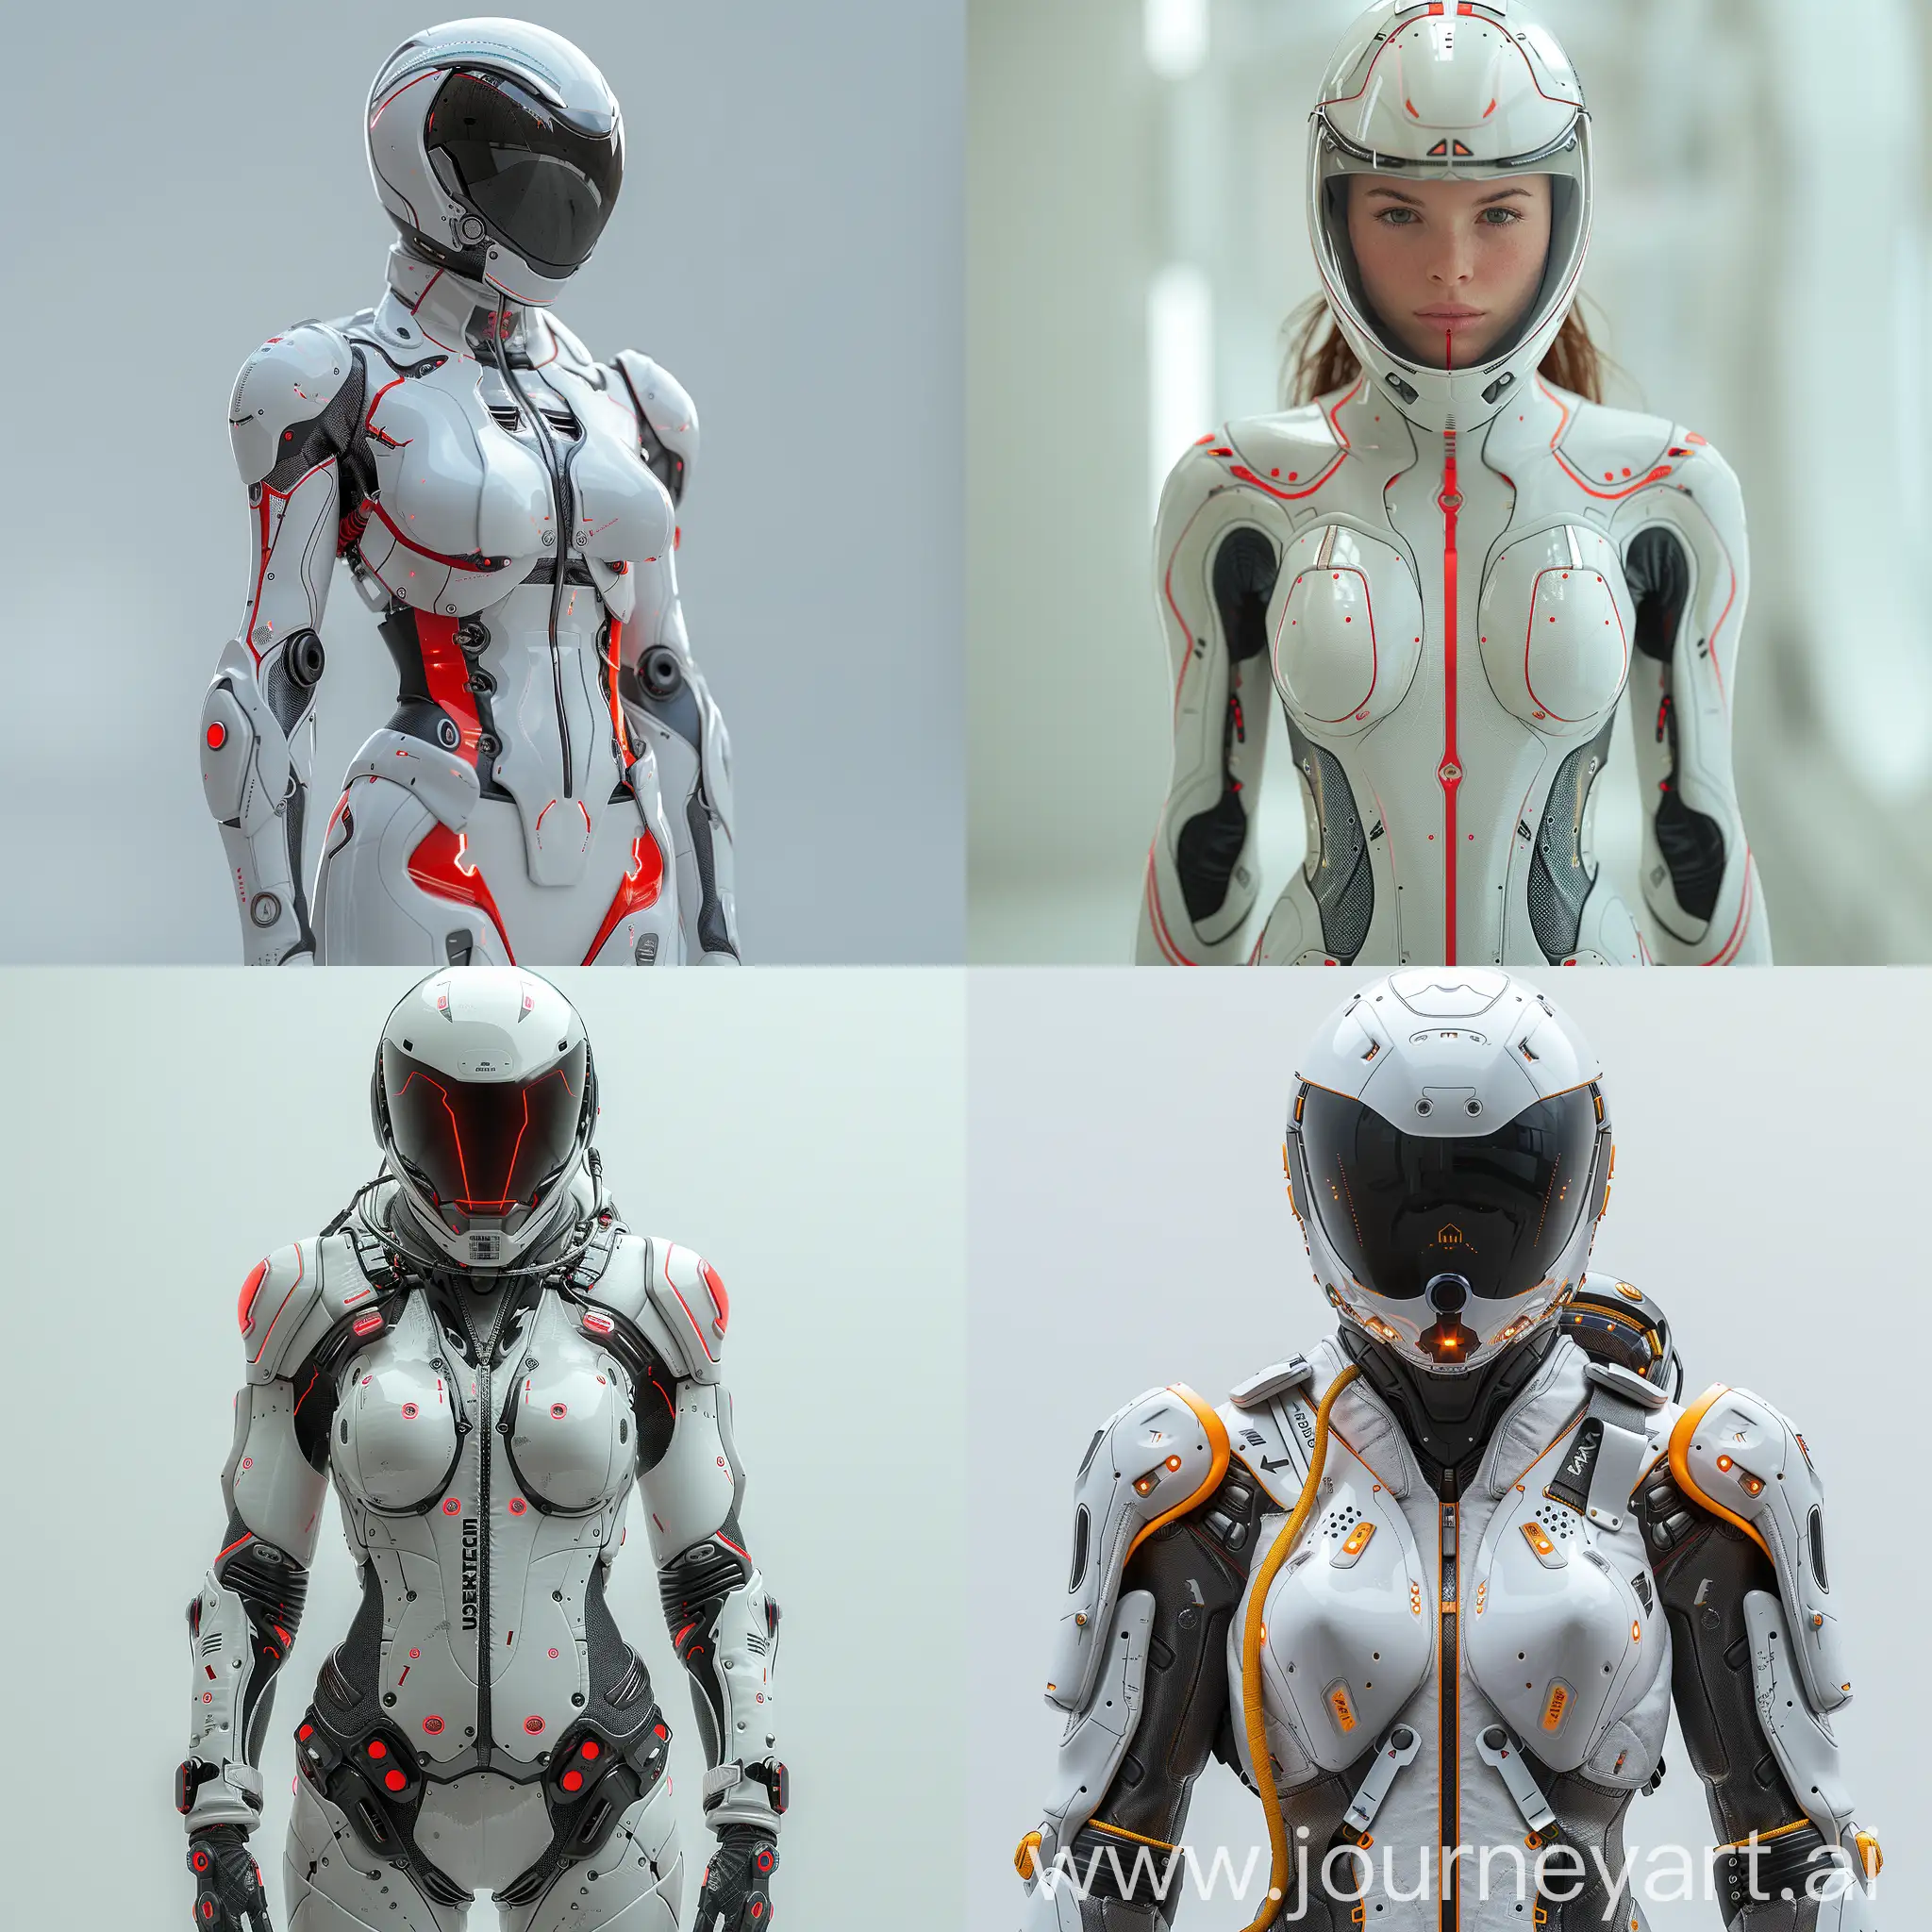 Futuristic-HighTech-Racer-Costume-in-Octane-Render